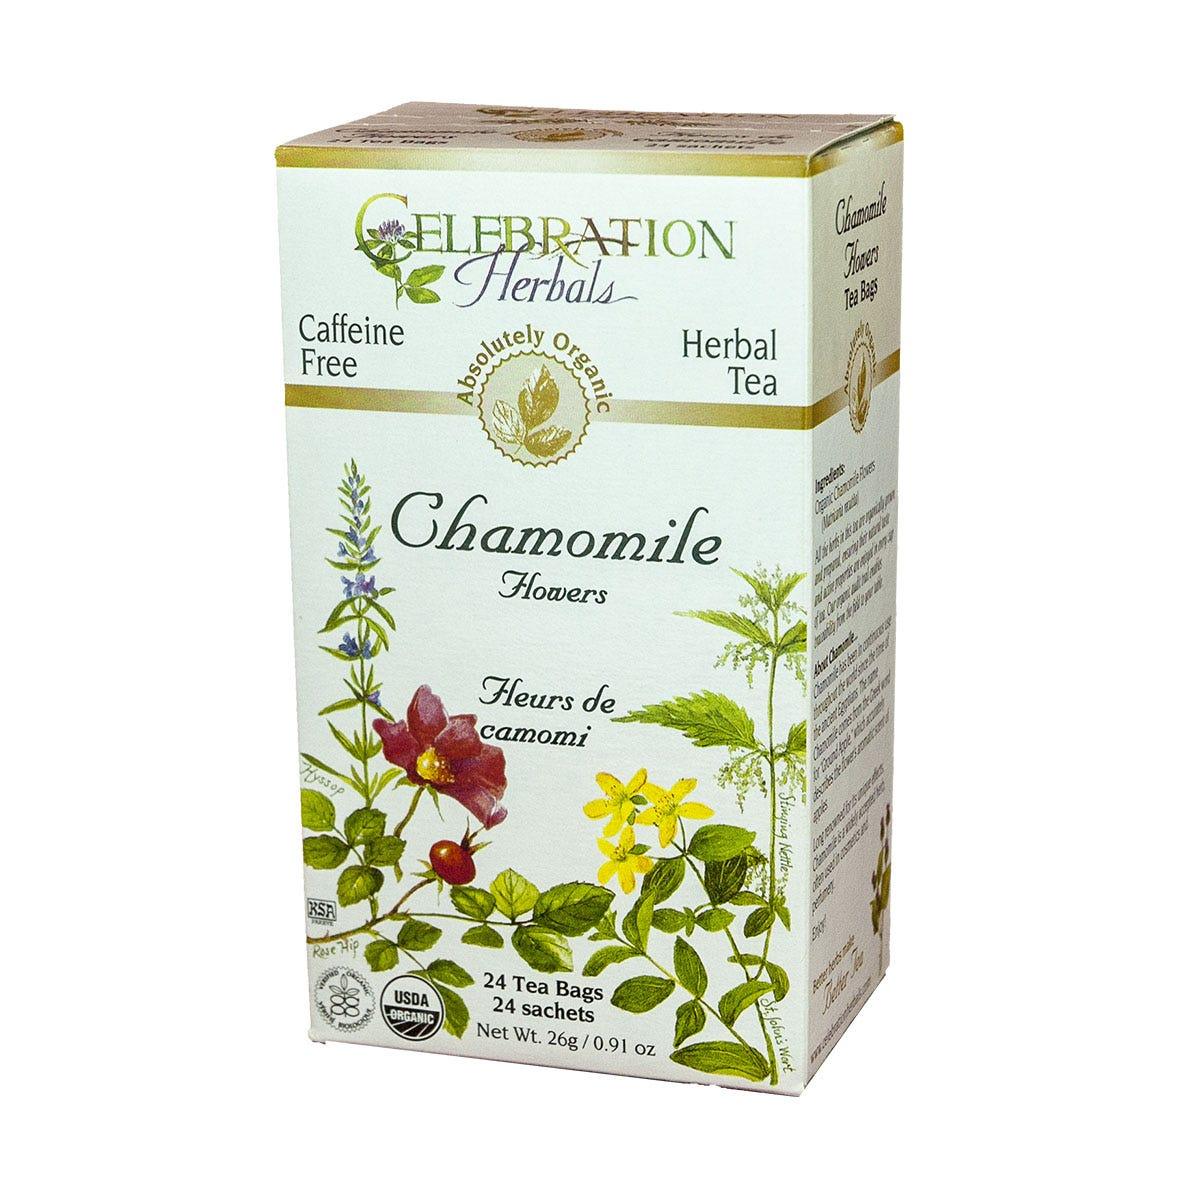 Celebration Herbals Organic Chamomile Flowers Tea 24 bags